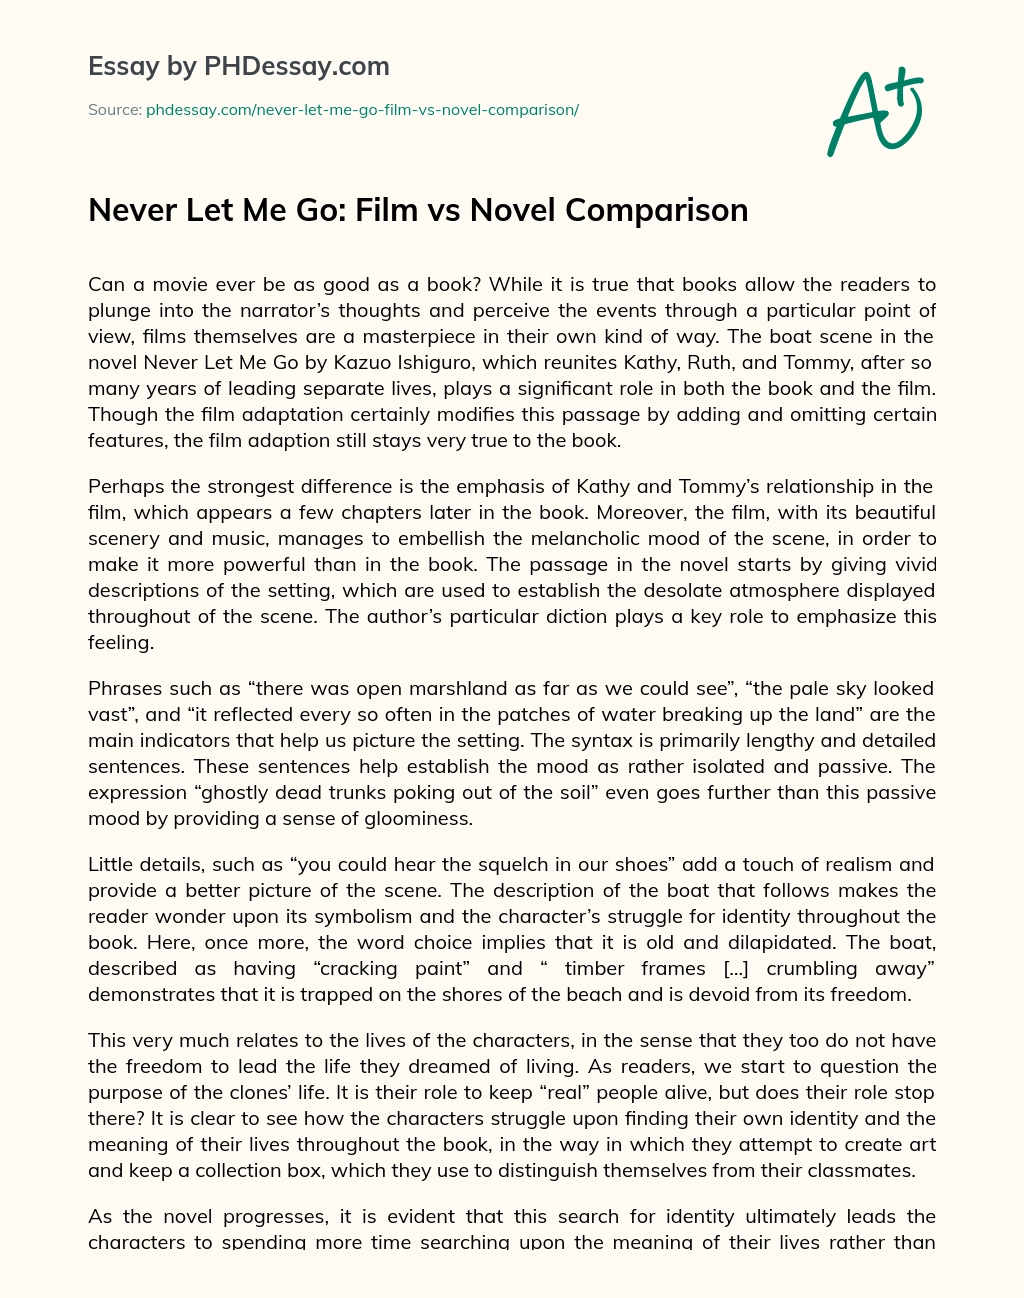 Never Let Me Go: Film vs Novel Comparison essay